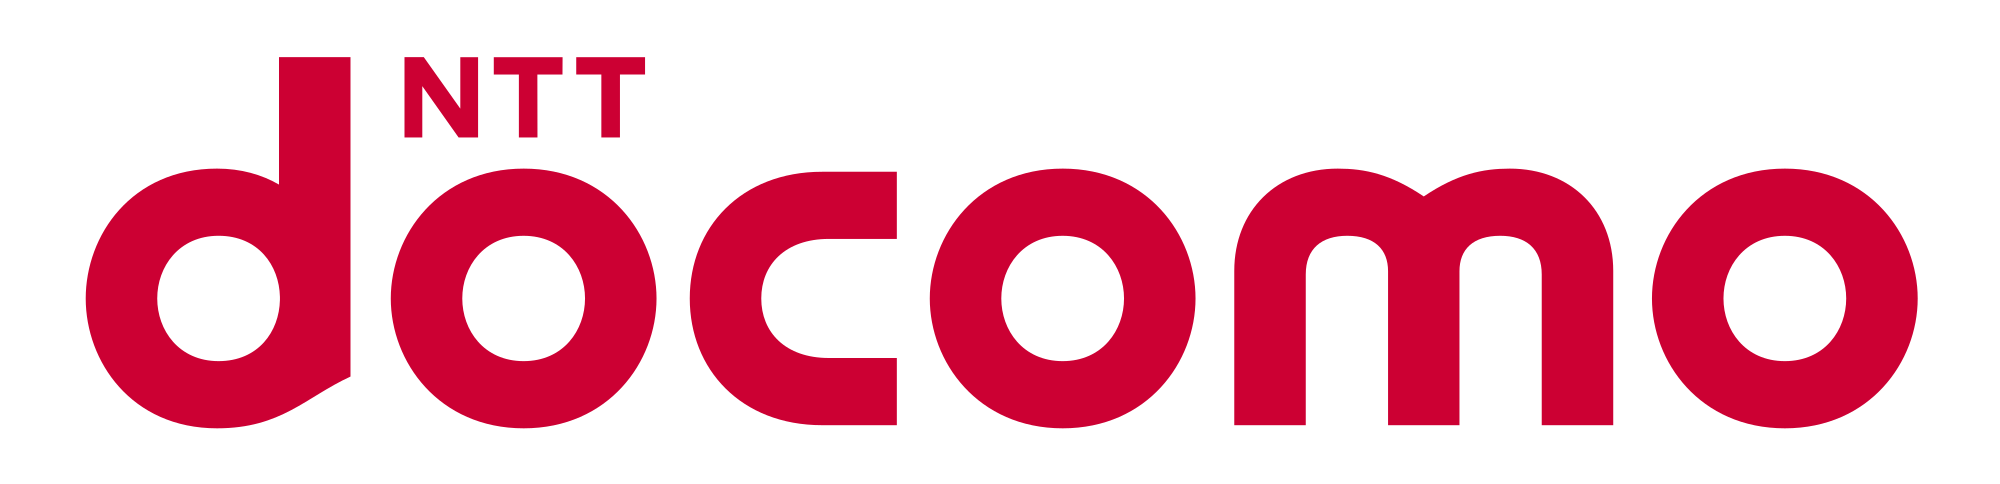 DOCOMO Logo - NTT docomo company logos.svg